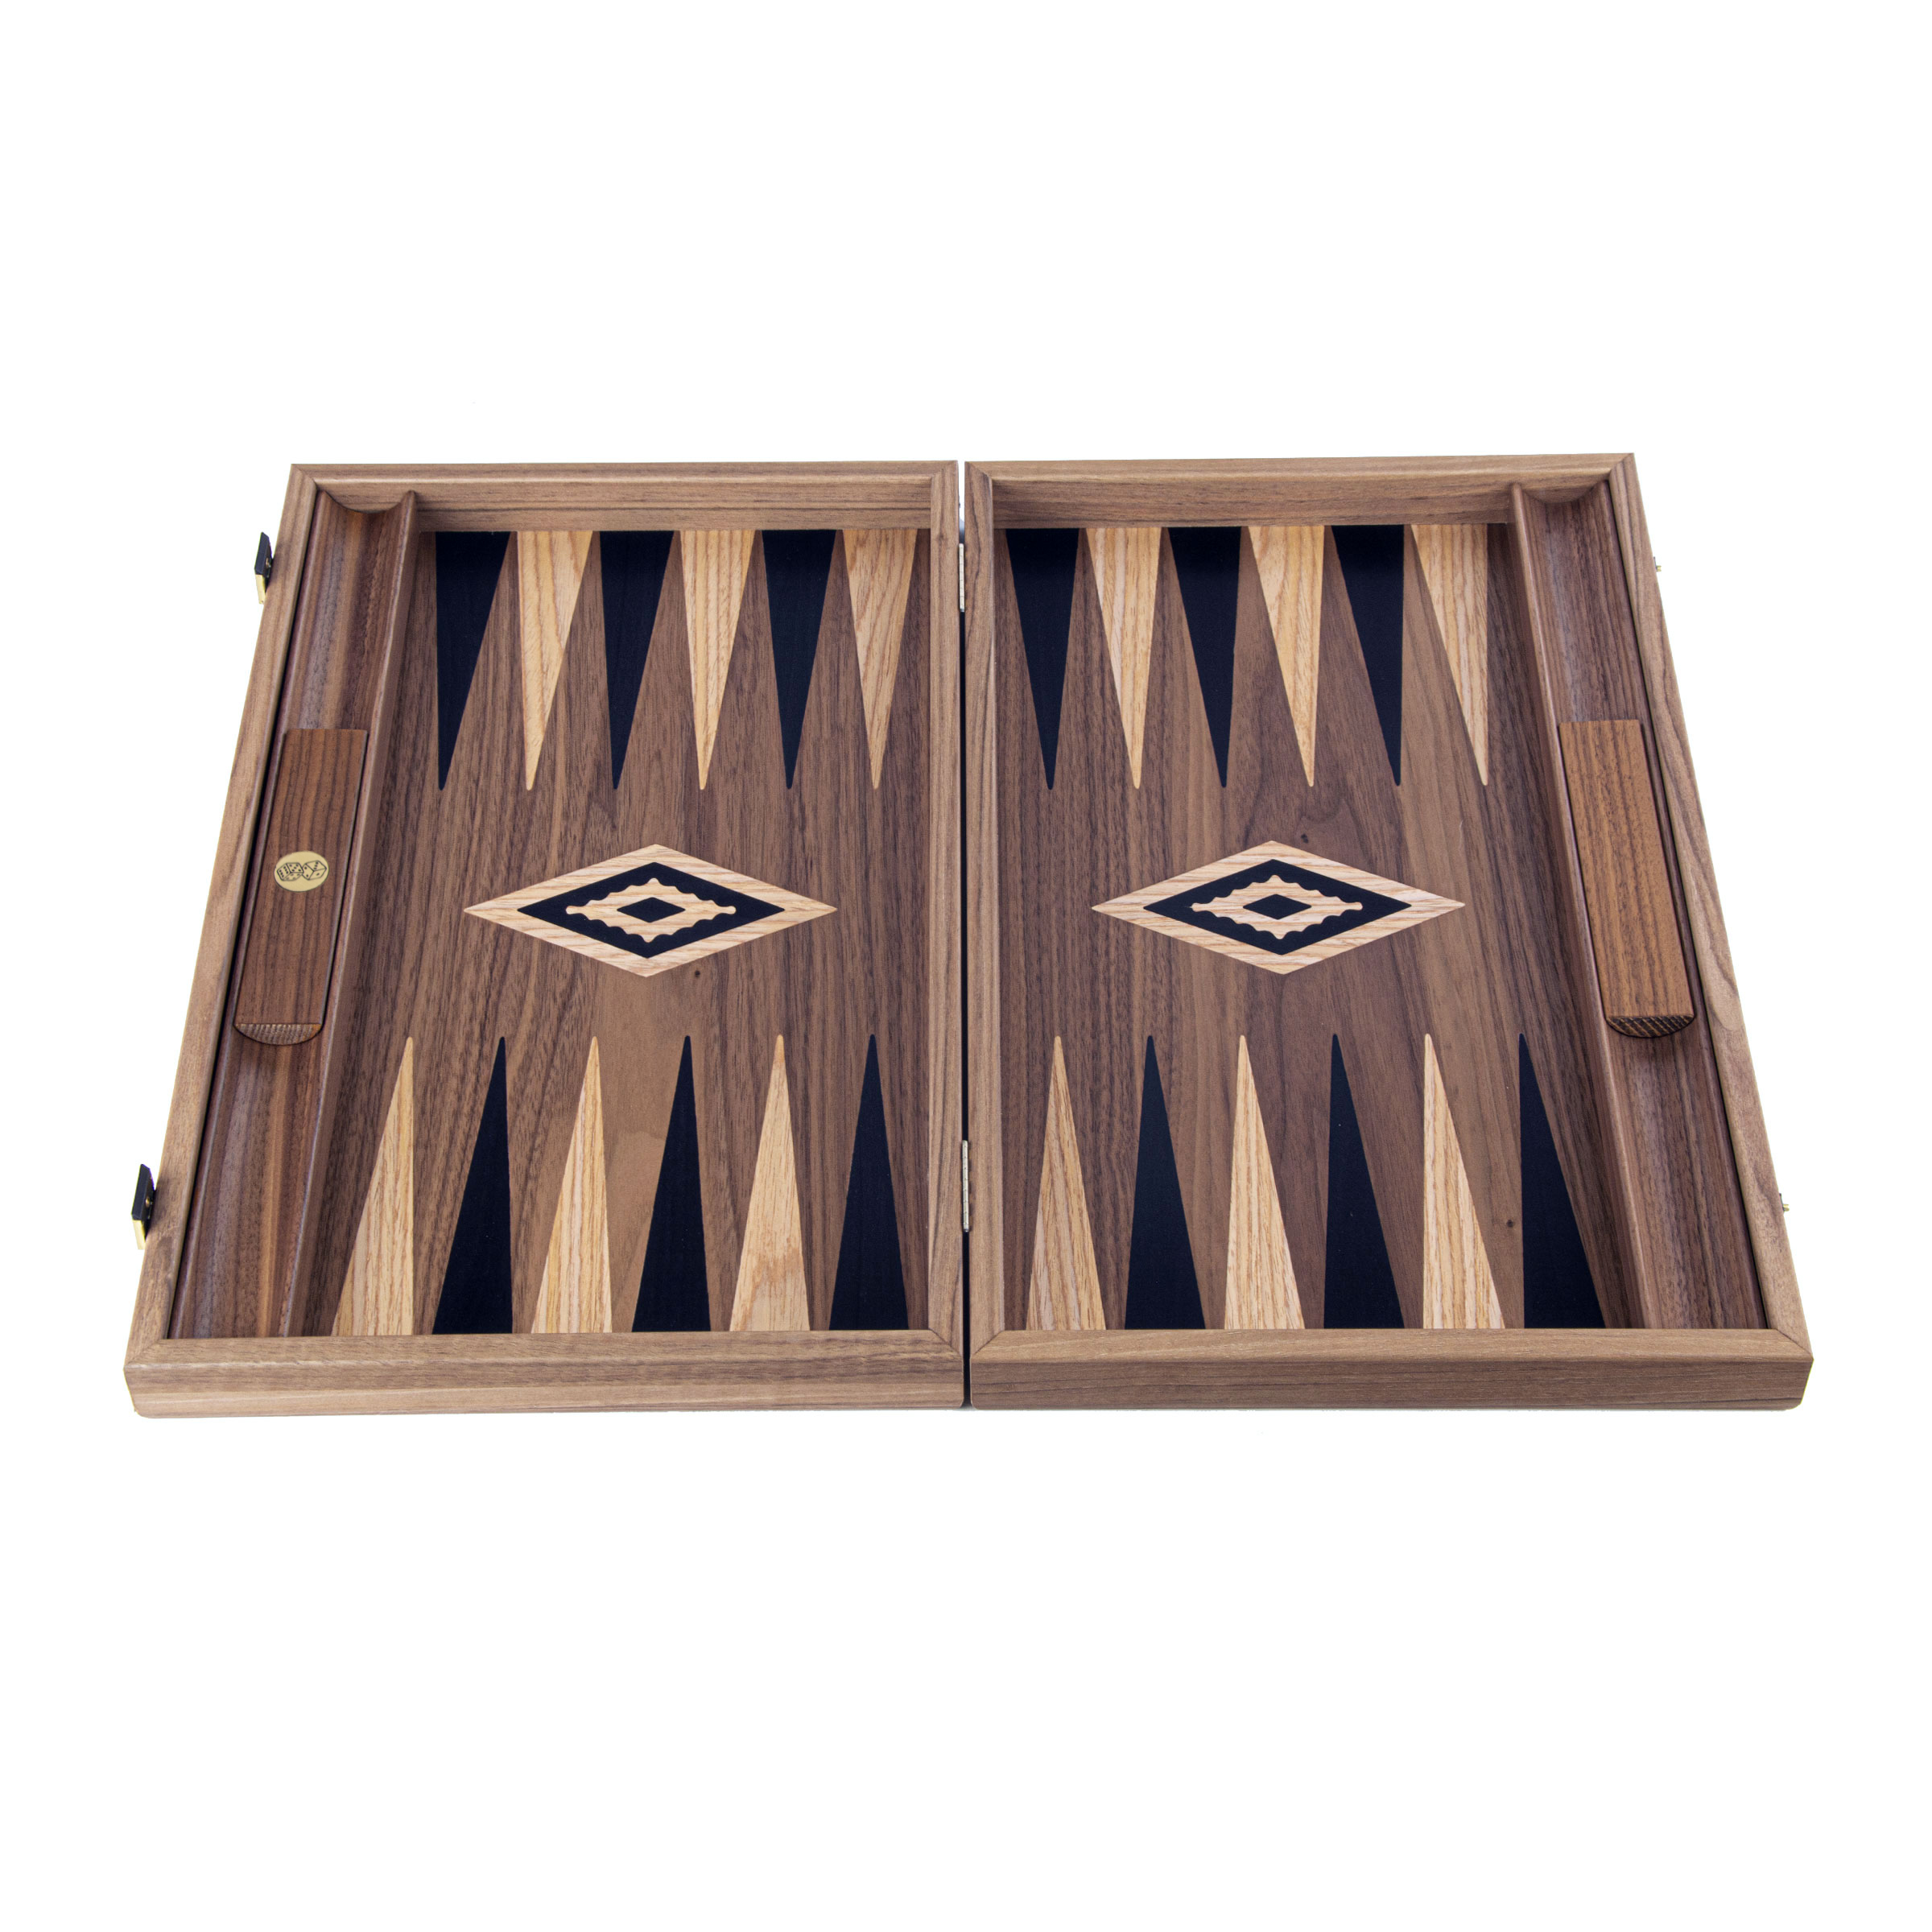 Luxury American Walnut with Inlay Wood Backgammon Set – 19 inches 